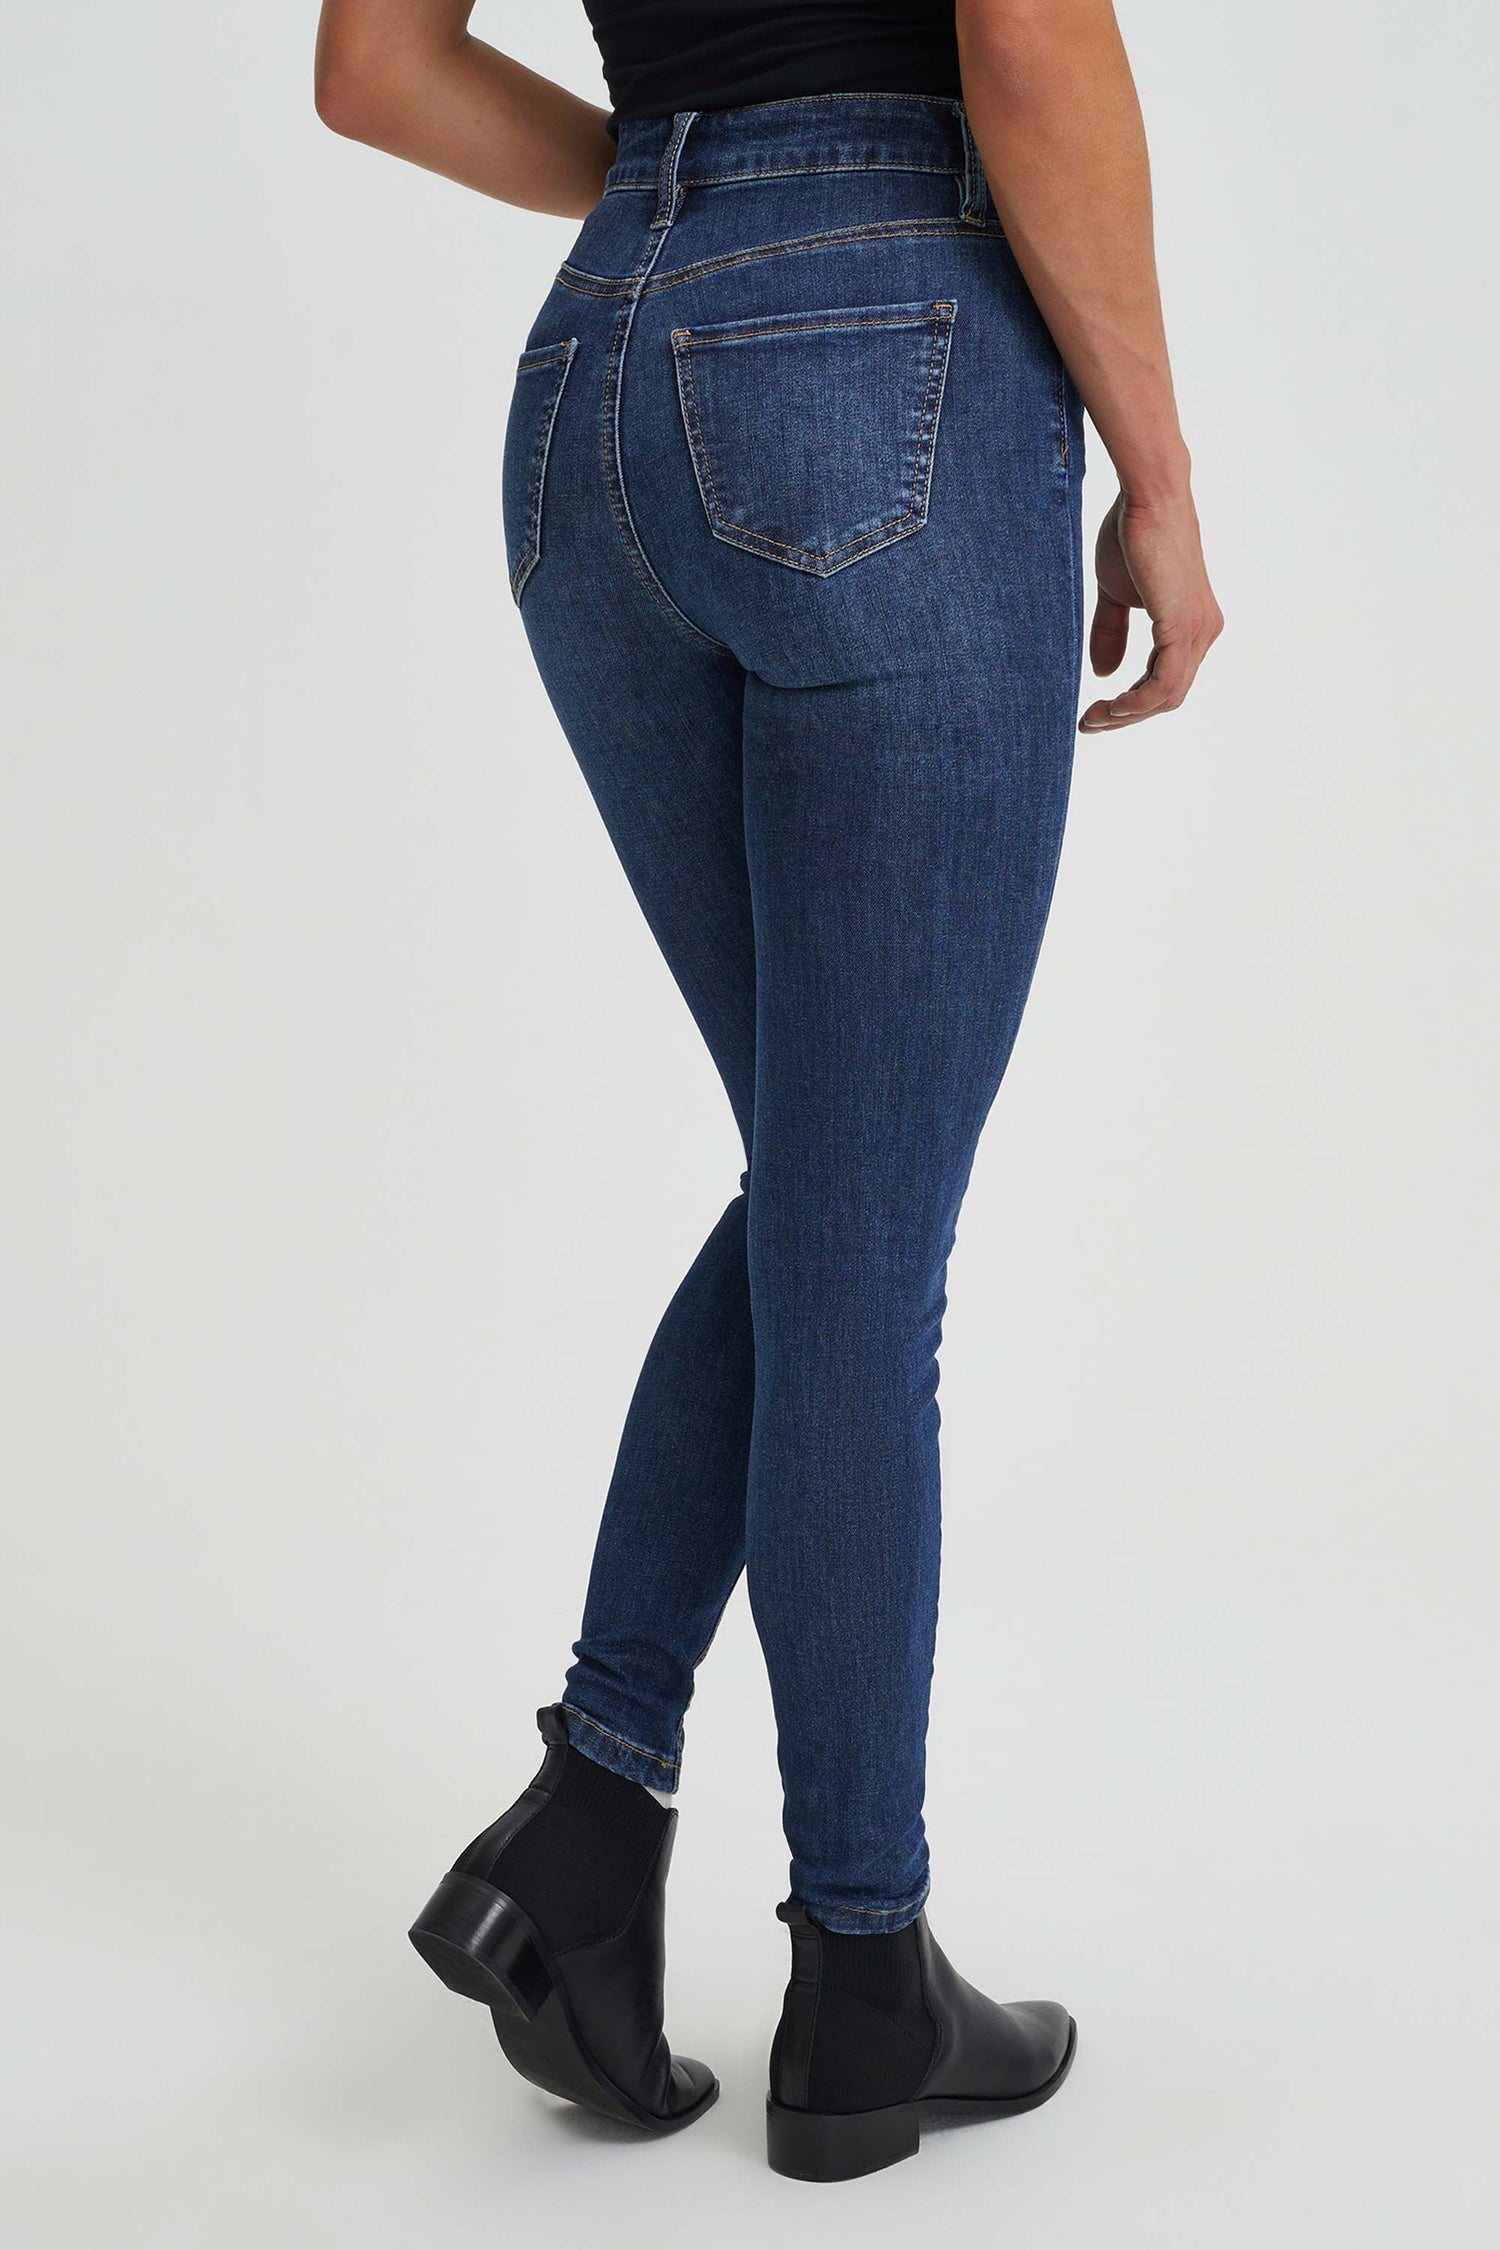 Narrow high-waisted jeans